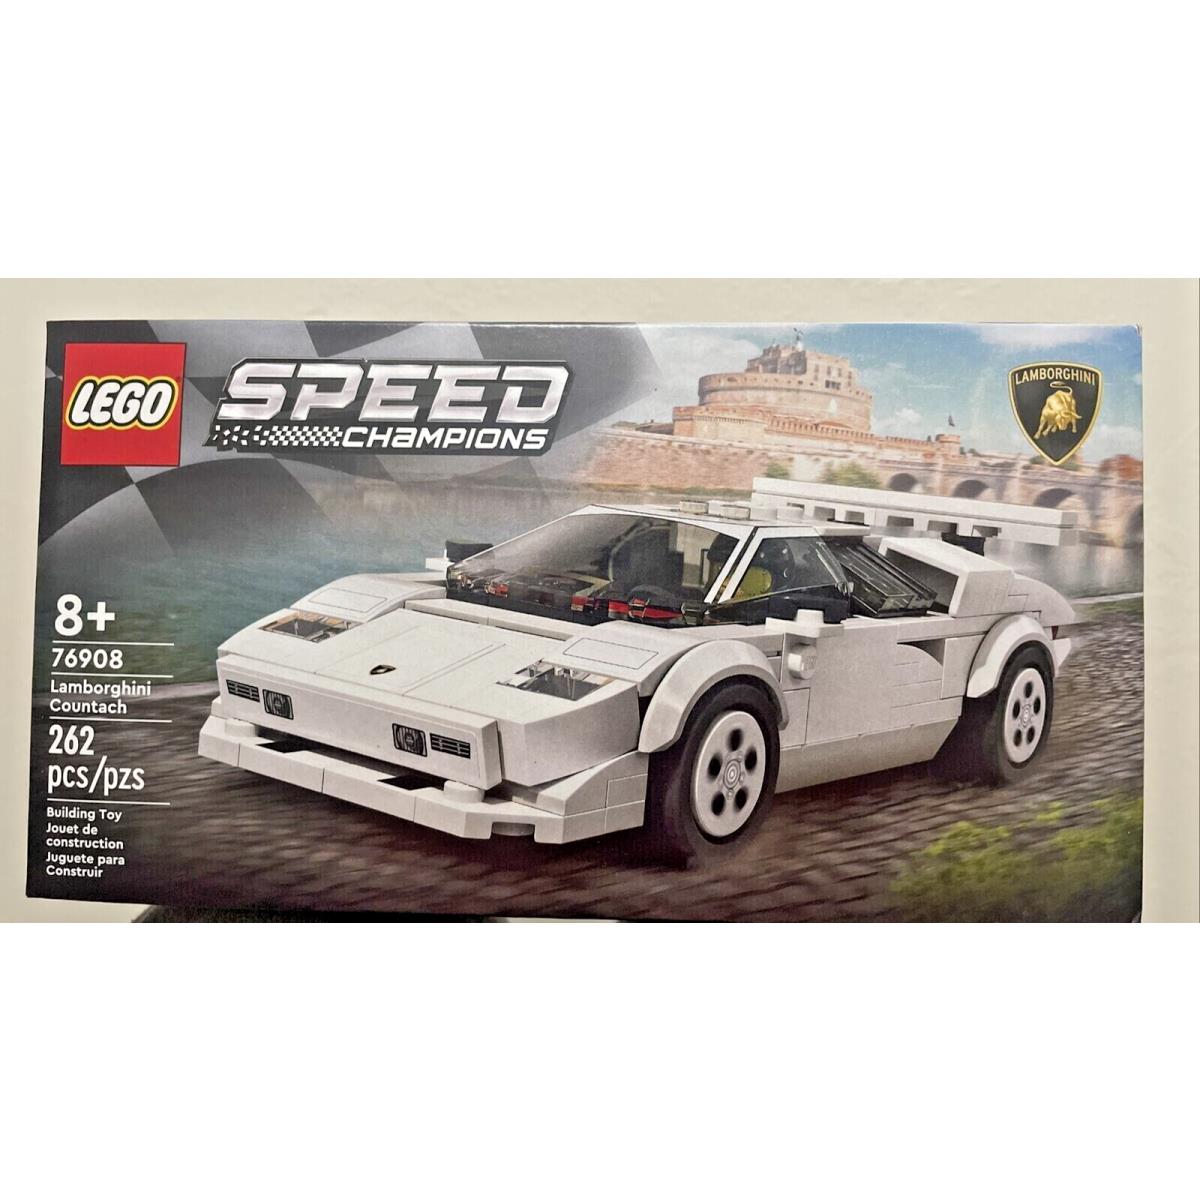 Lego Speed Champions Lamborghini Countach 76908 Building Kit 262 Pcs